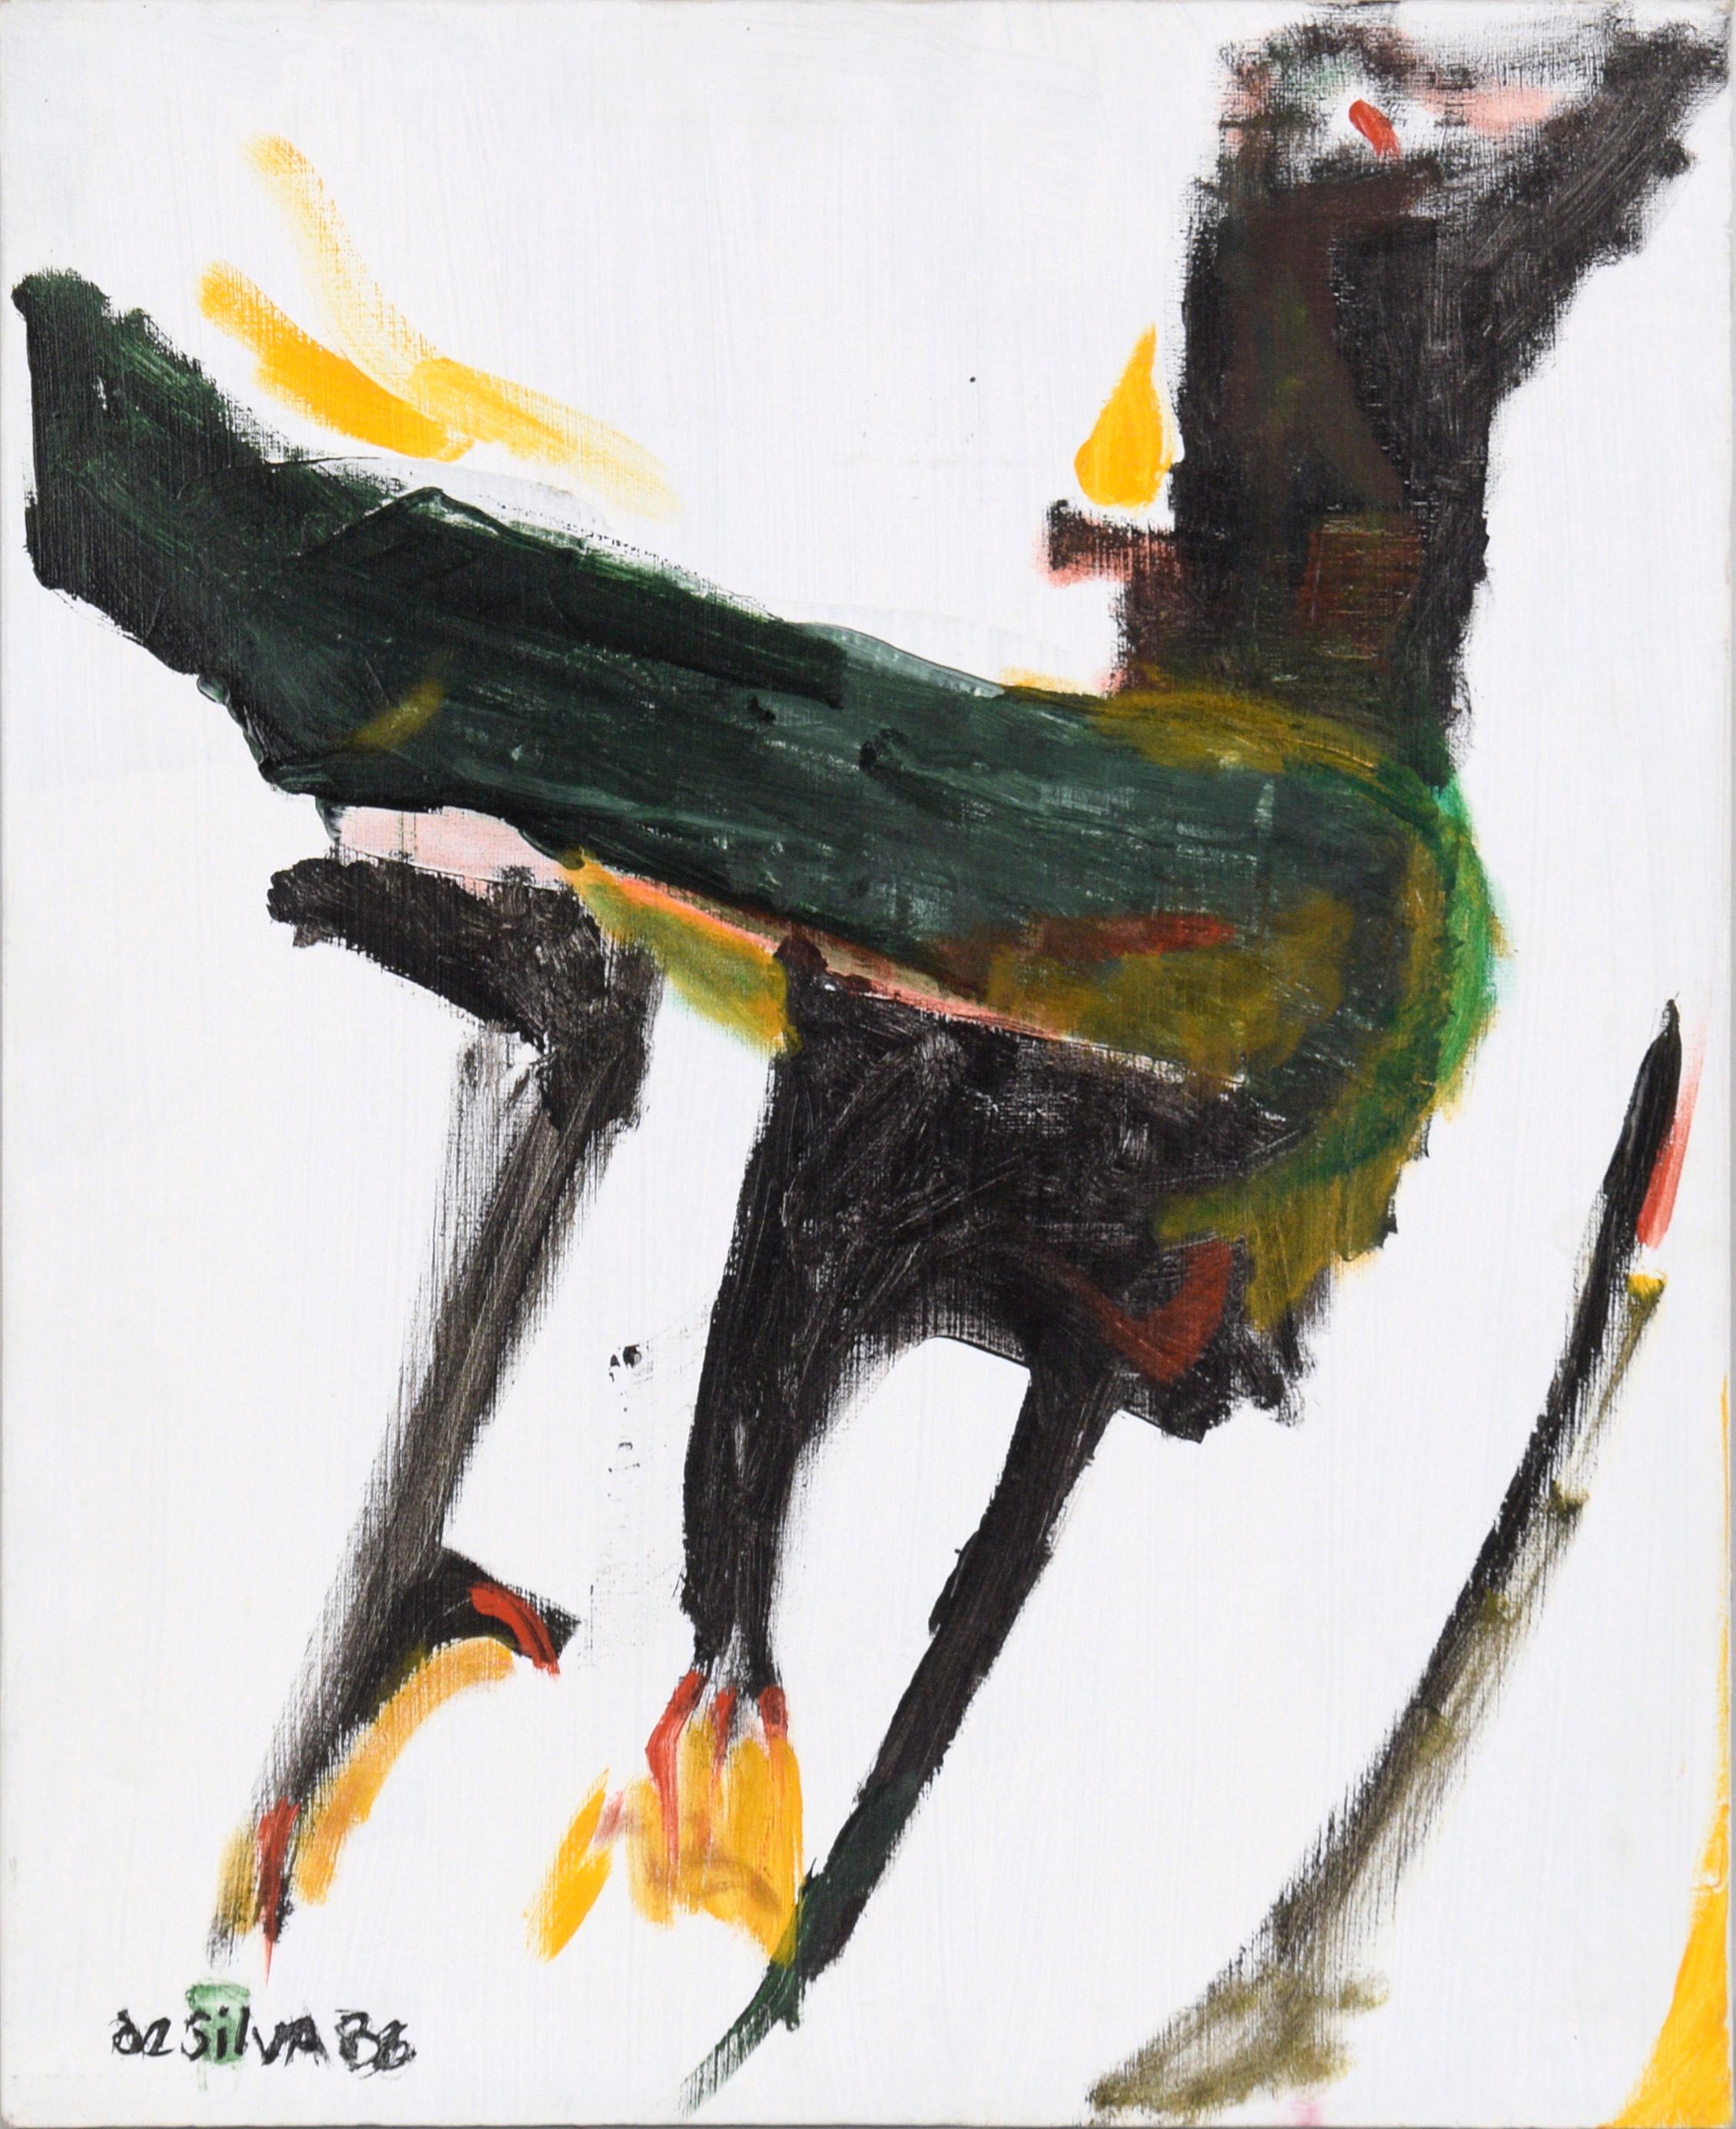 Ricardo de Silva Figurative Painting - "Bird on a Wire" The Crow - Acrylic on Canvas